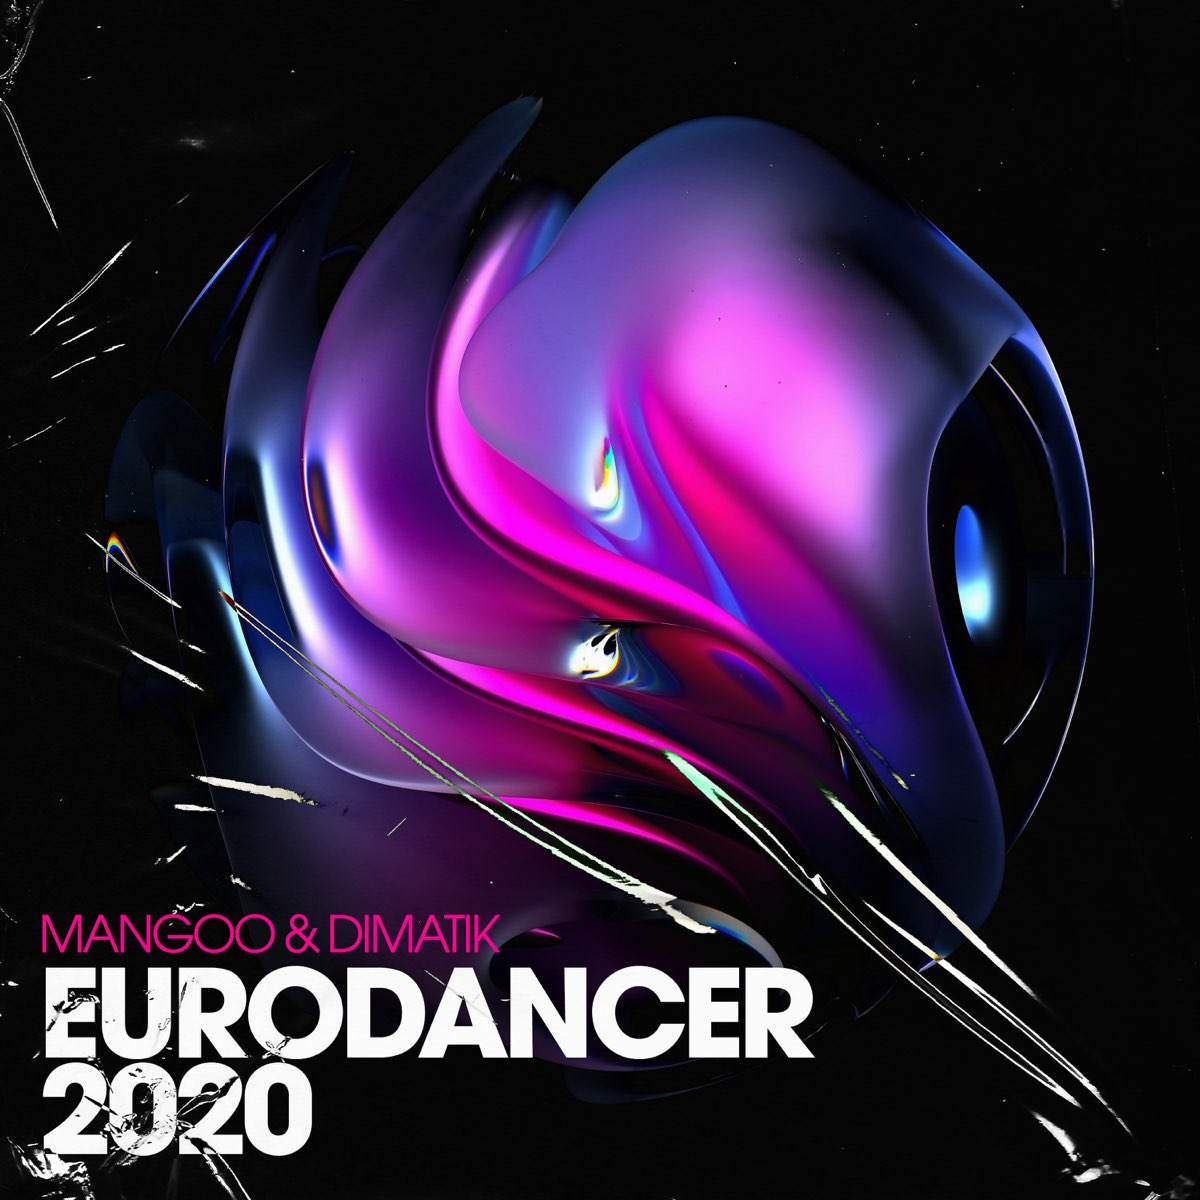 Mangoo & Dimatik — Eurodancer 2020 cover artwork